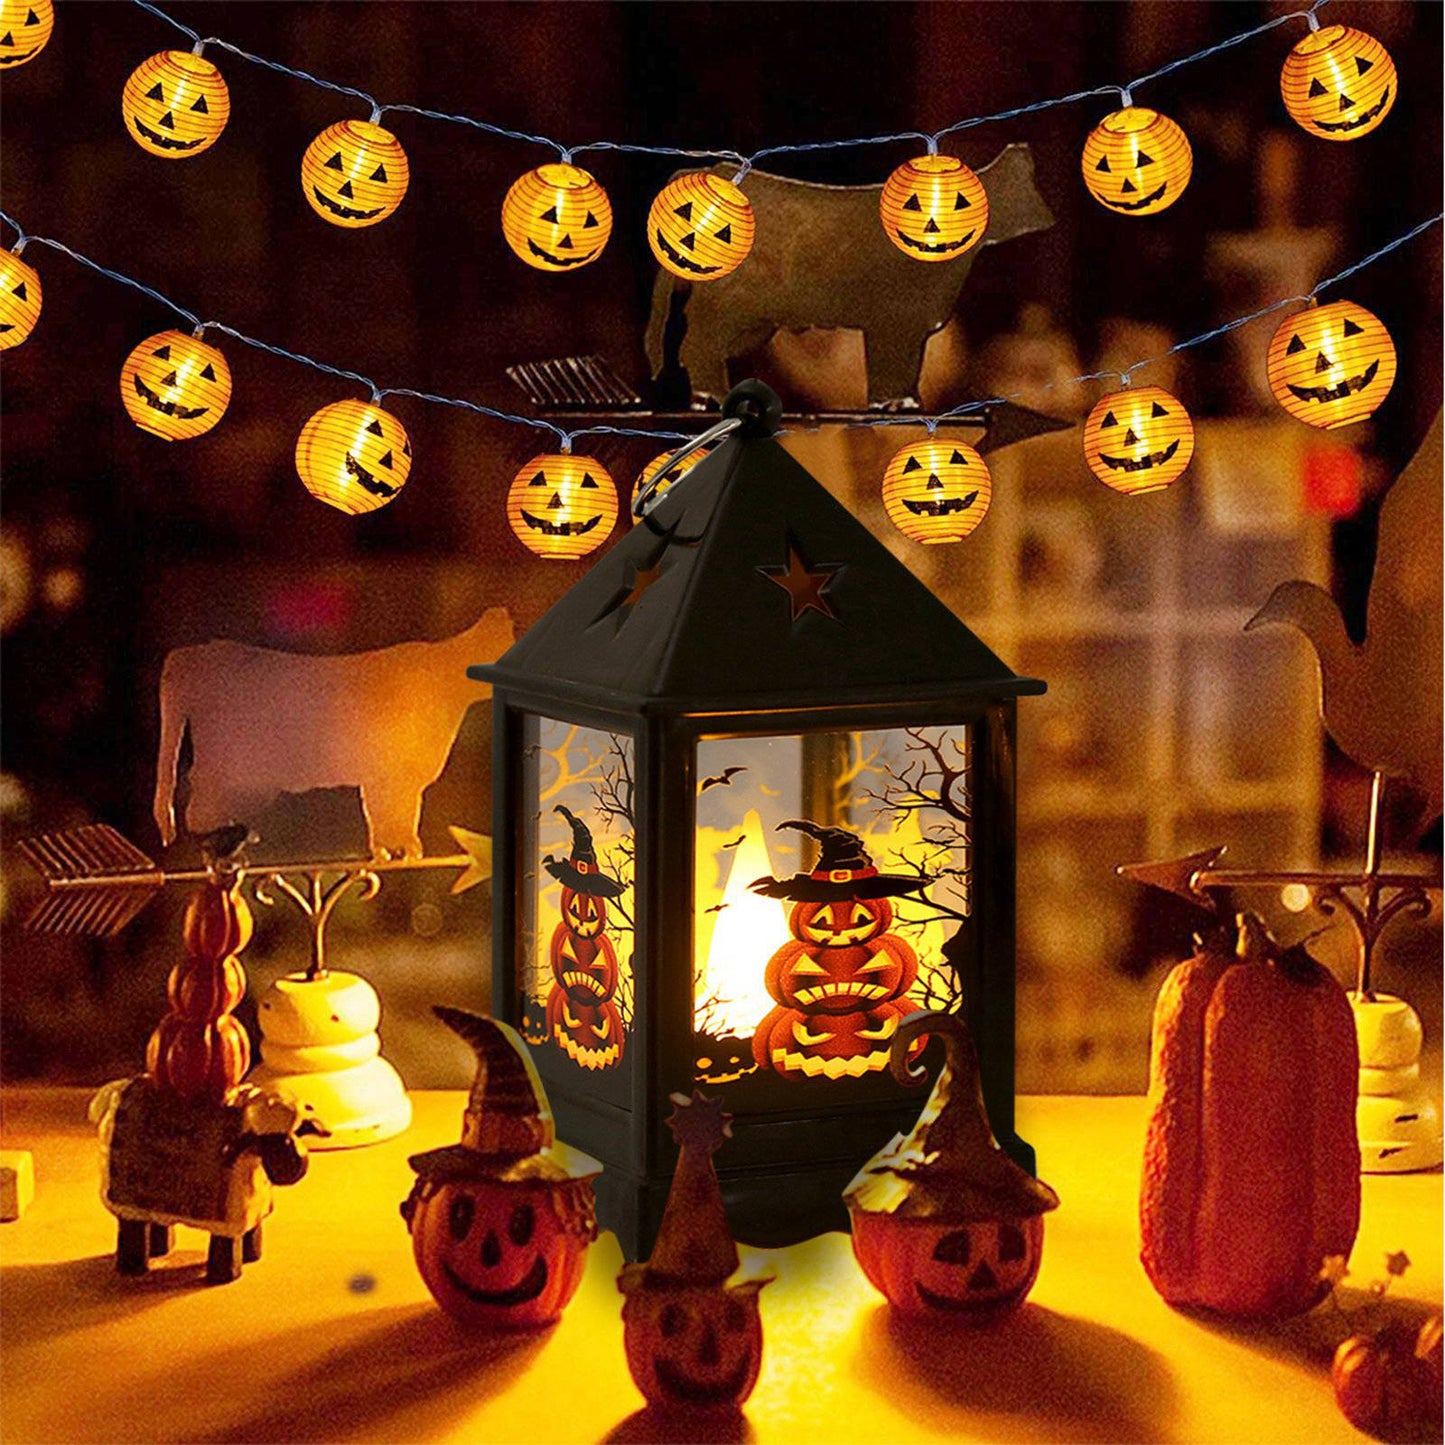 Halloween decorations, Night Light Festival decorations, suitable for Halloween celebration parties, ghosts